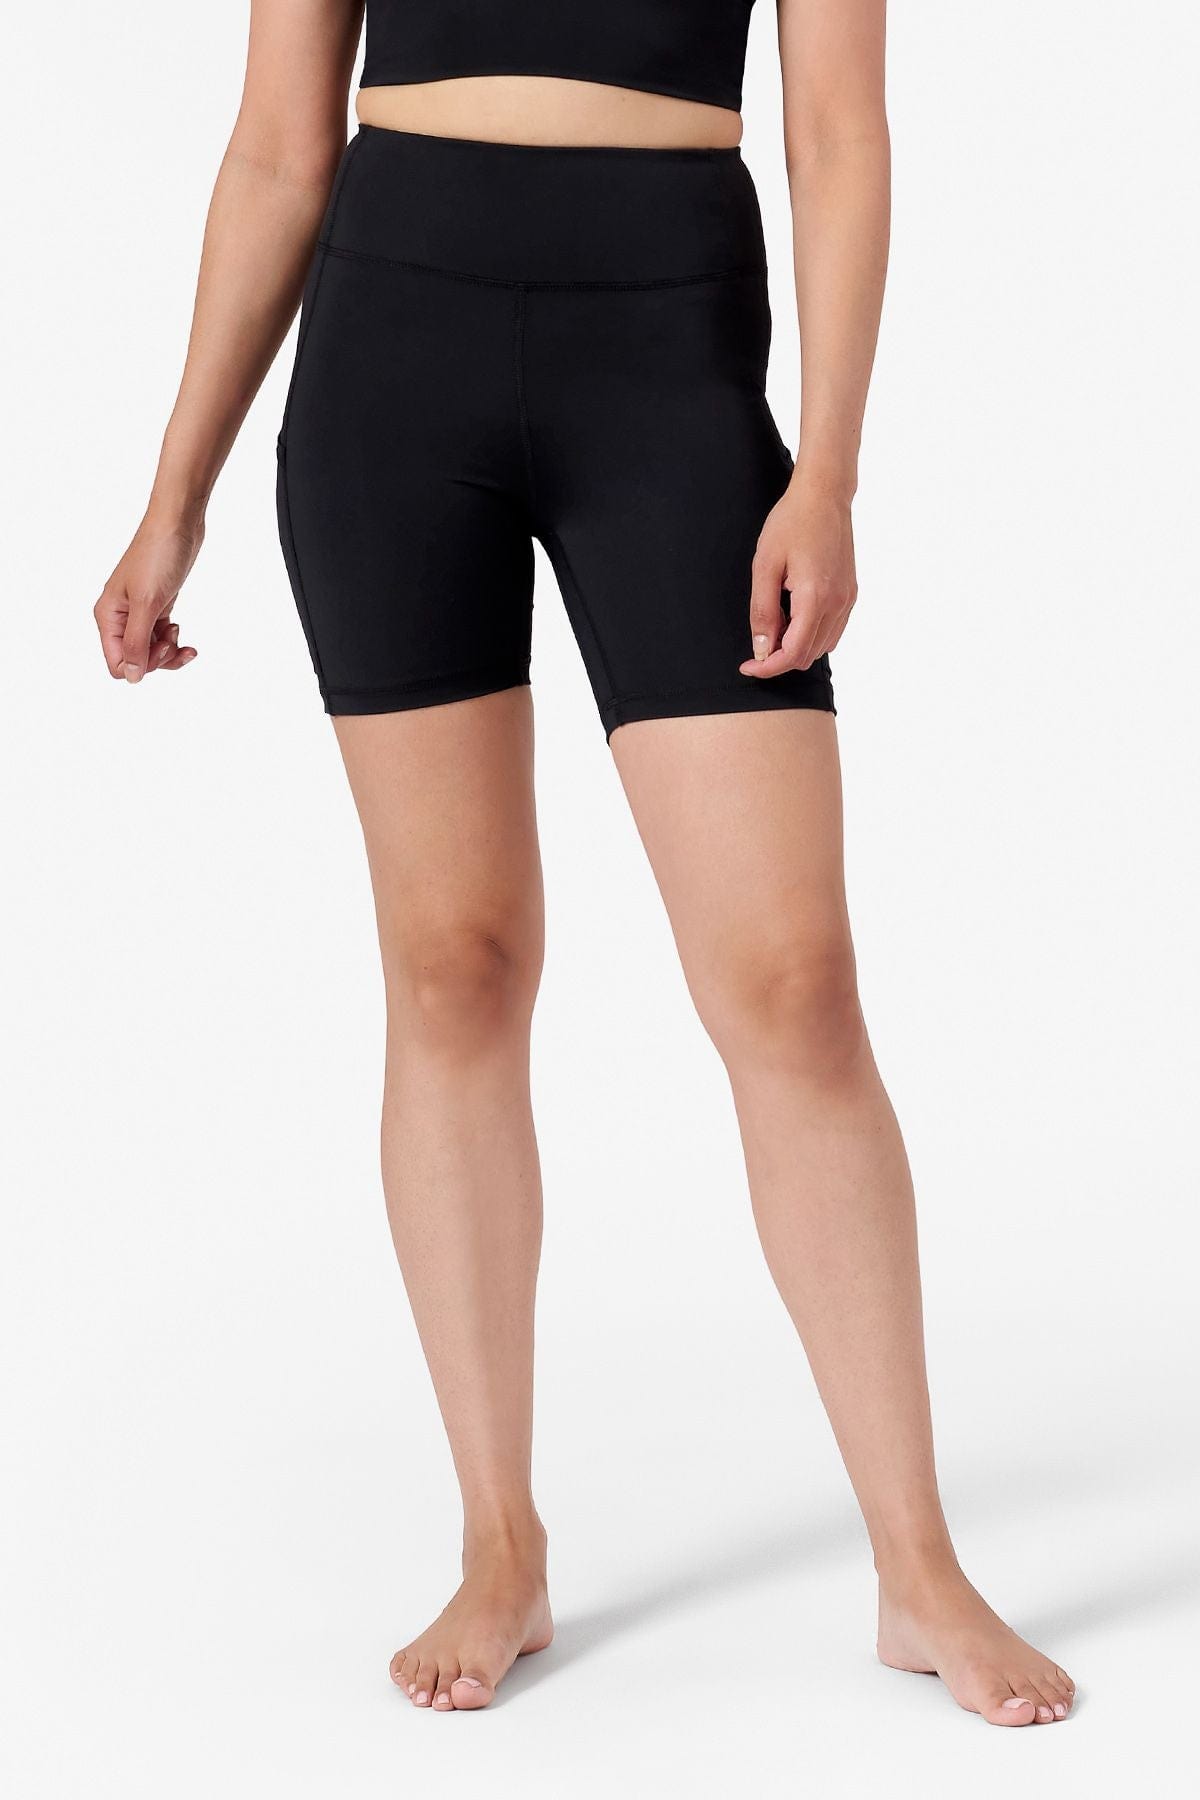 a women wearing black bike shorts with side pockets